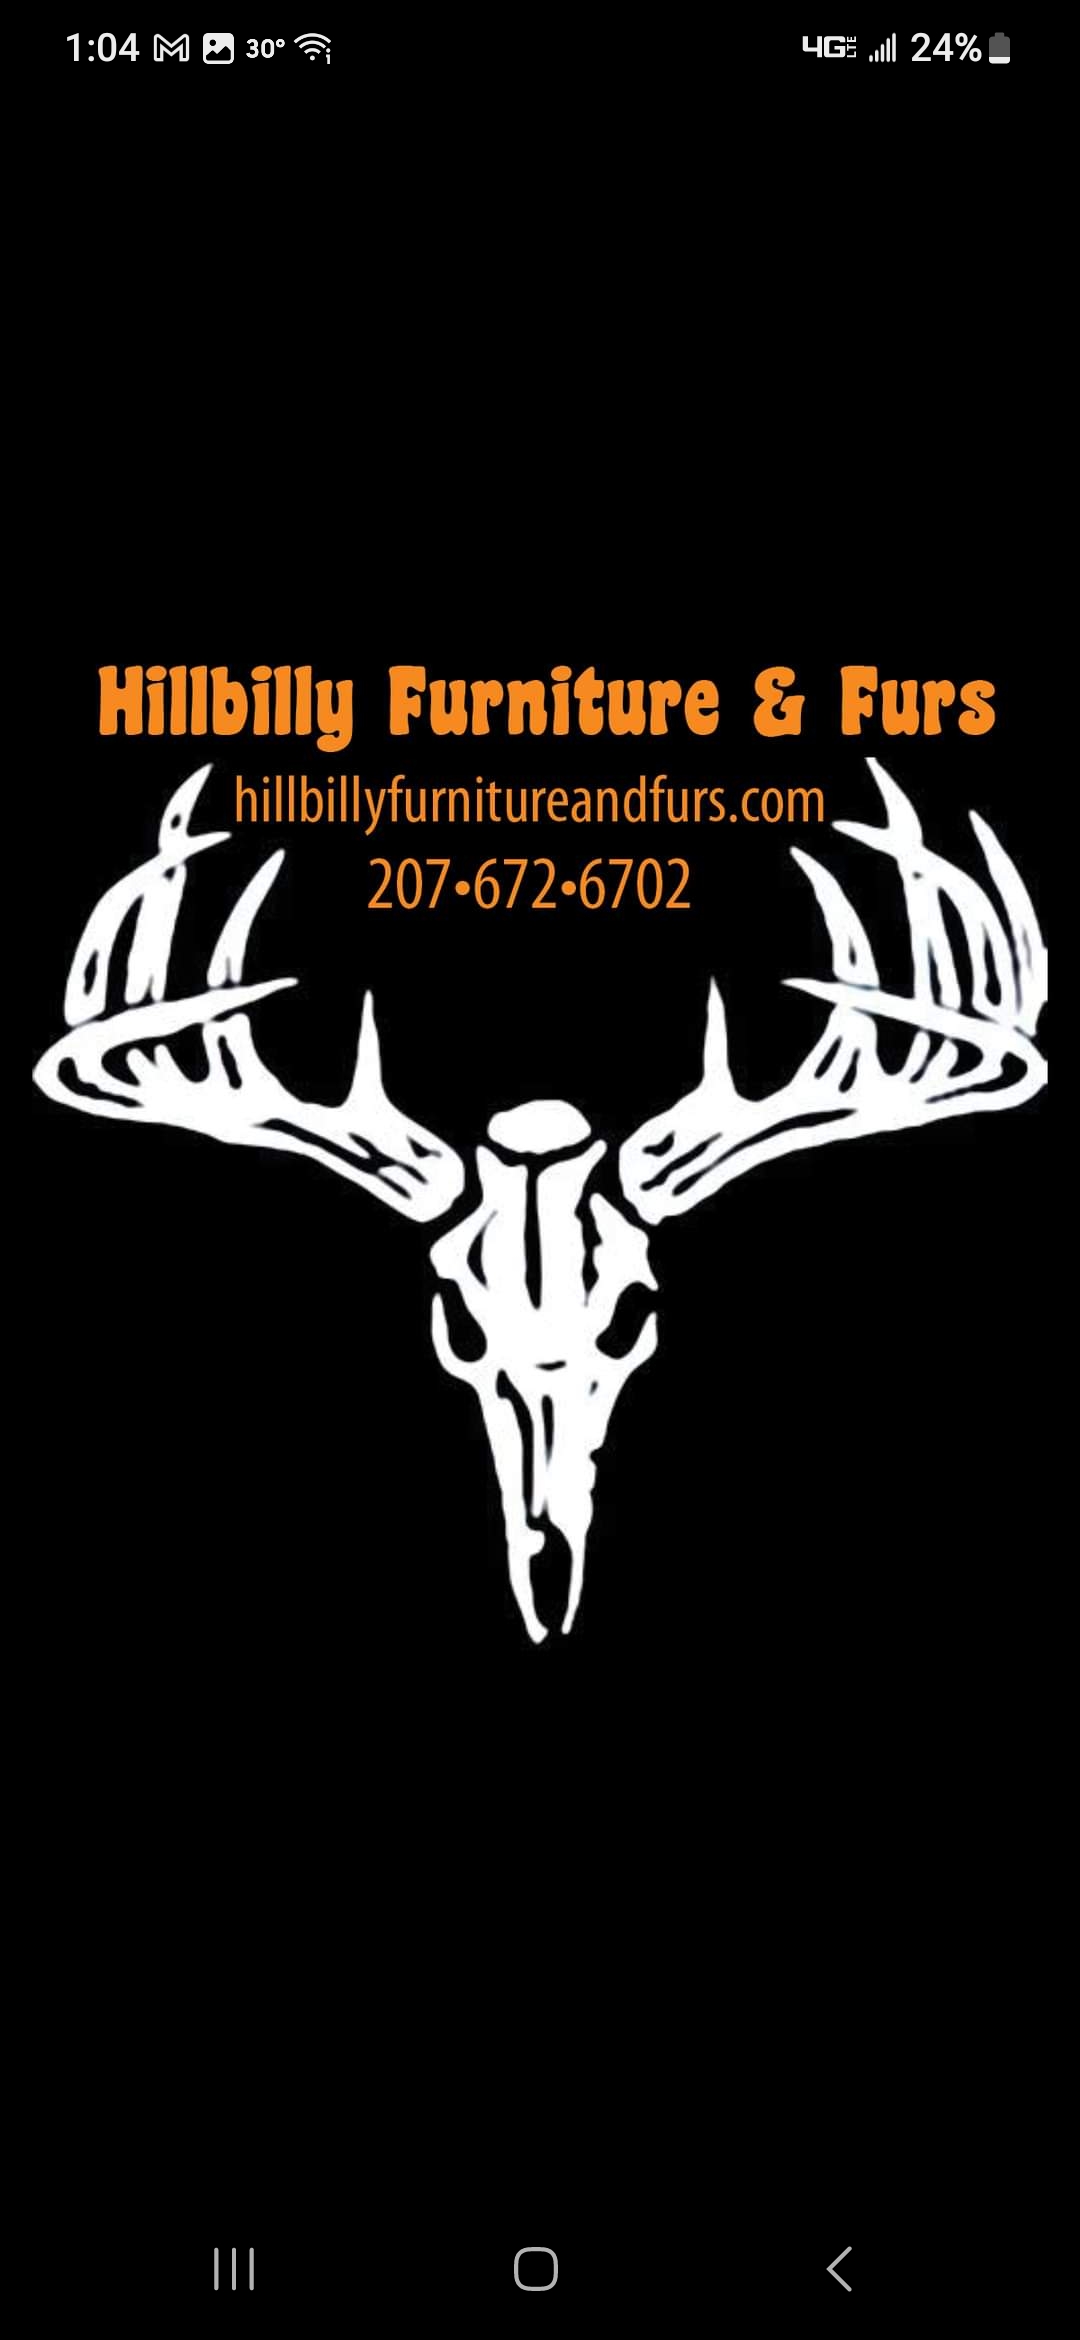 Hillbilly Furnature and Furs